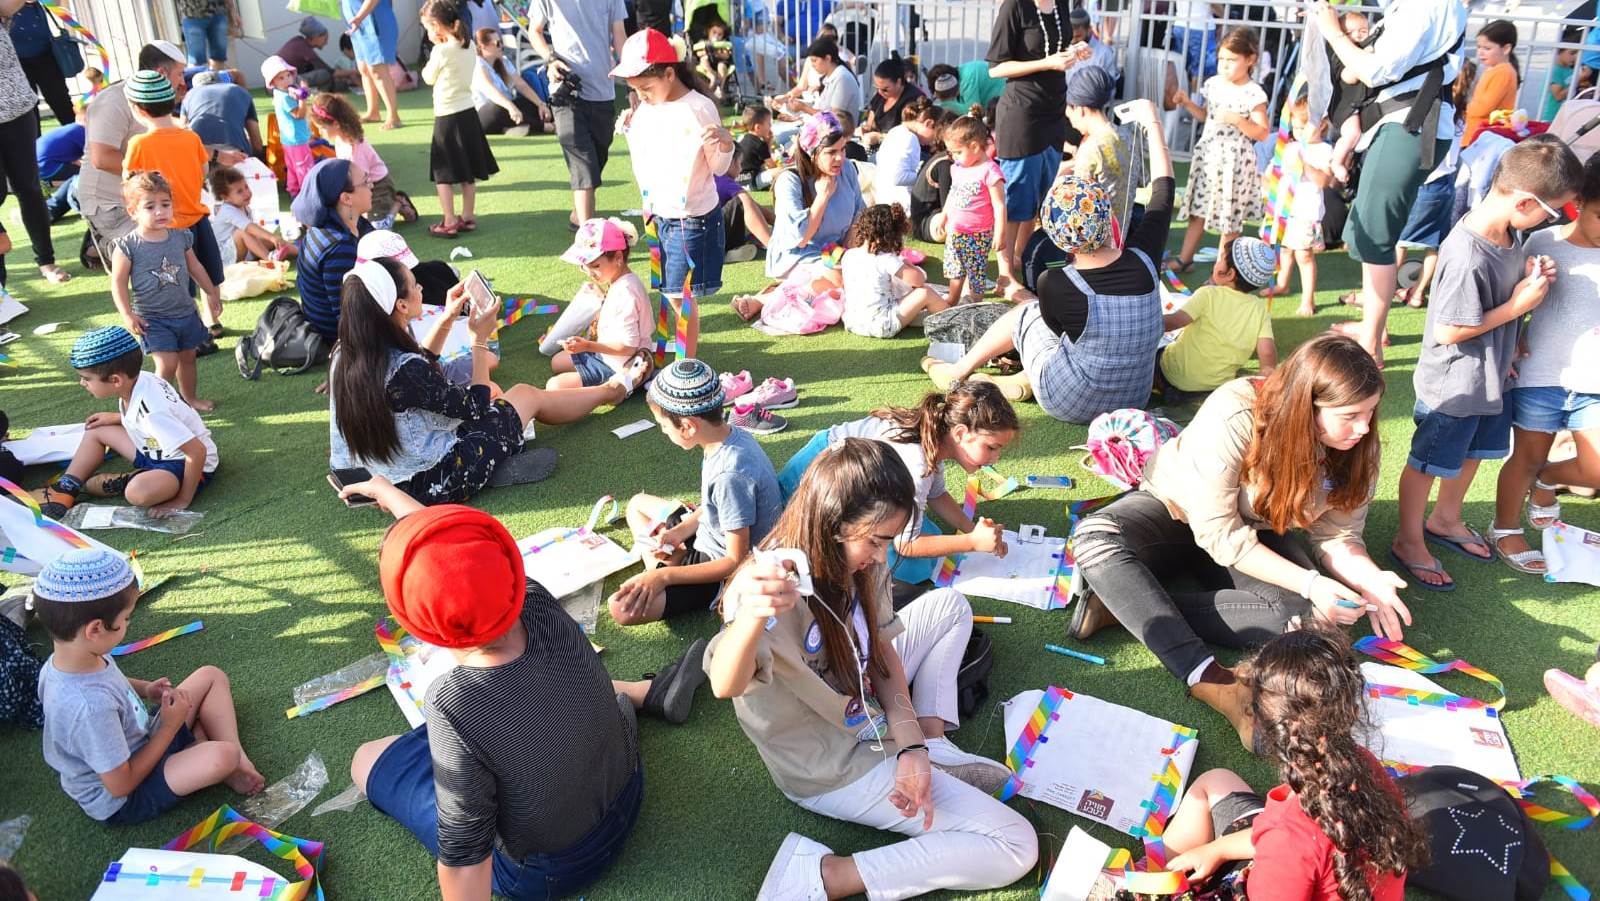 Children and parents making kites at the 7 Sderot Mall Center, June 11, 2018. Photo courtesy of the Sderot Municipality Spokesperson